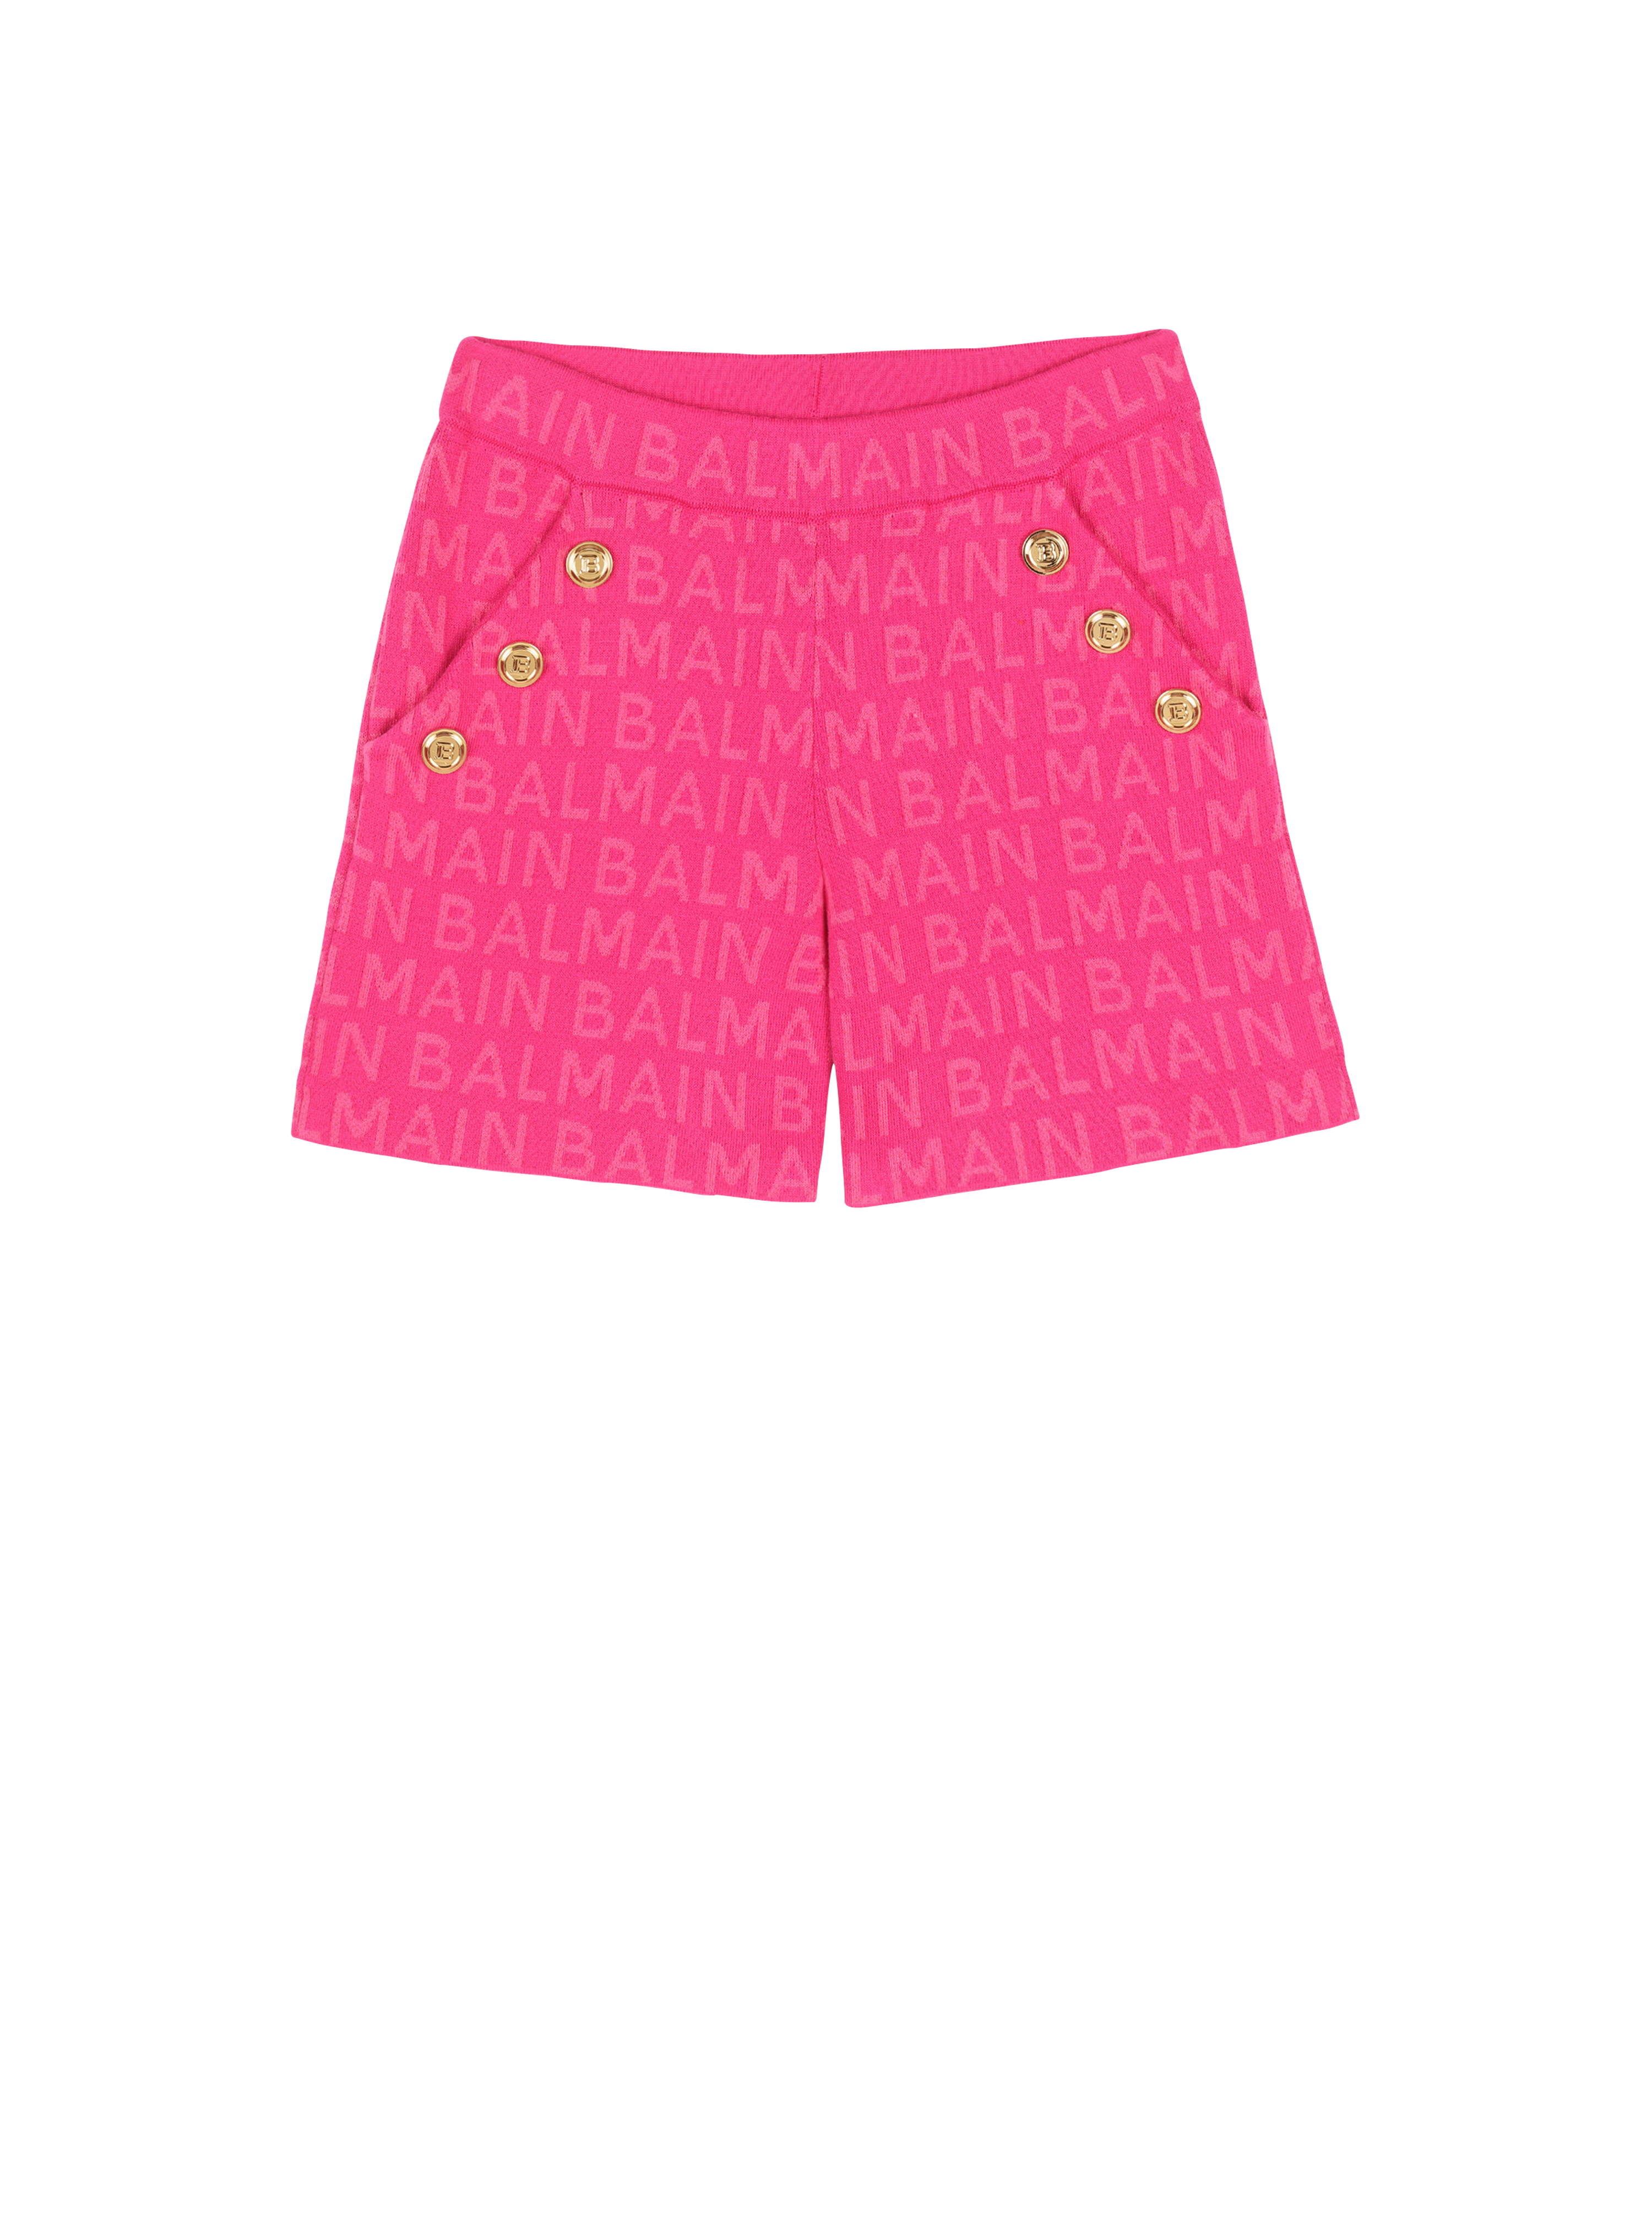 Cotton shorts with Balmain logo, pink